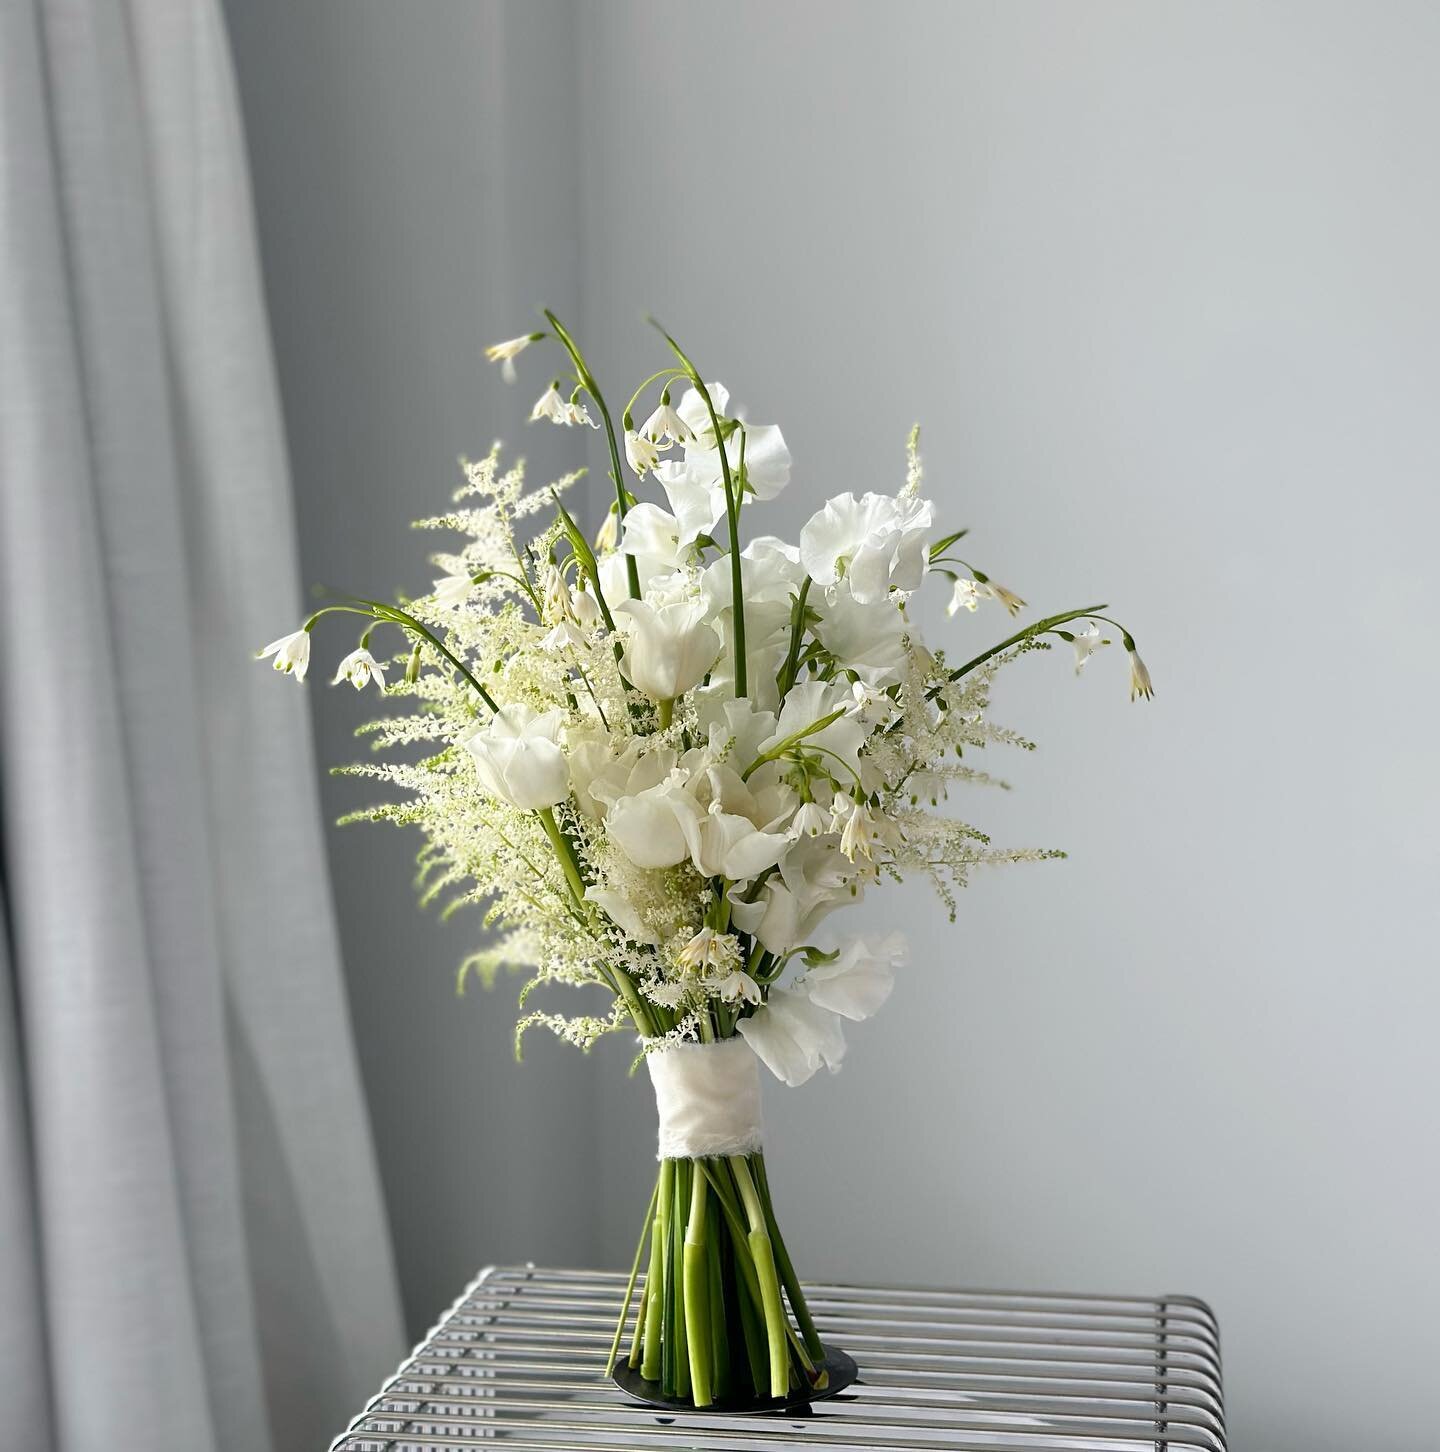 white + green
never fail color combo
.
#bridalbouquet #bouquet
#weddingbouquet #churchwedding
#njweddingflower #nyweddingflower